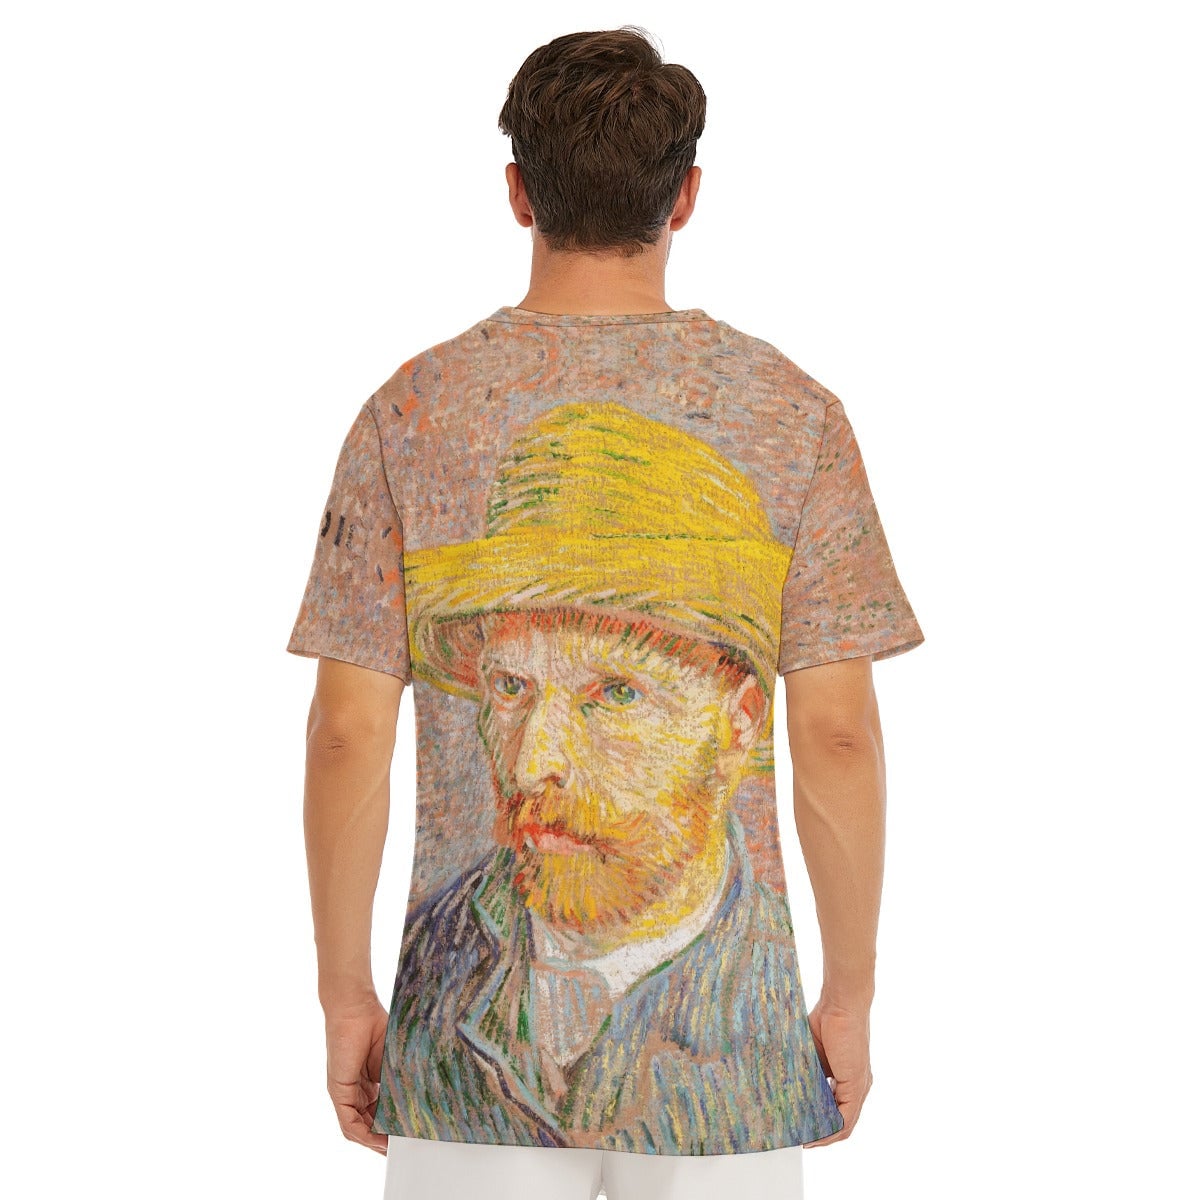 Self-Portrait with a Straw Hat Van Gogh T-Shirt